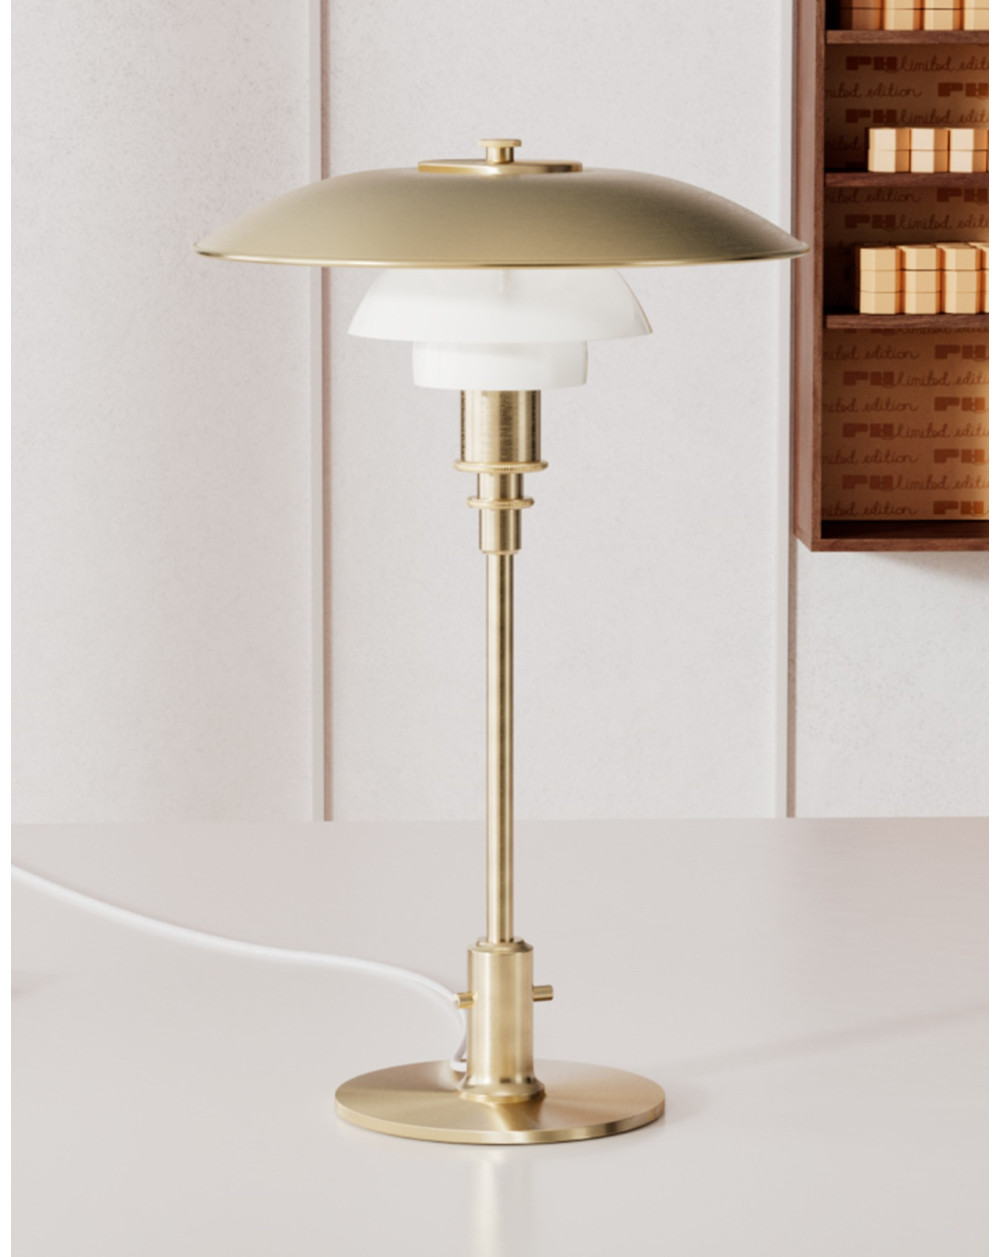 PH 3/2 LAMPE DE TABLE - PH Limited Edition 